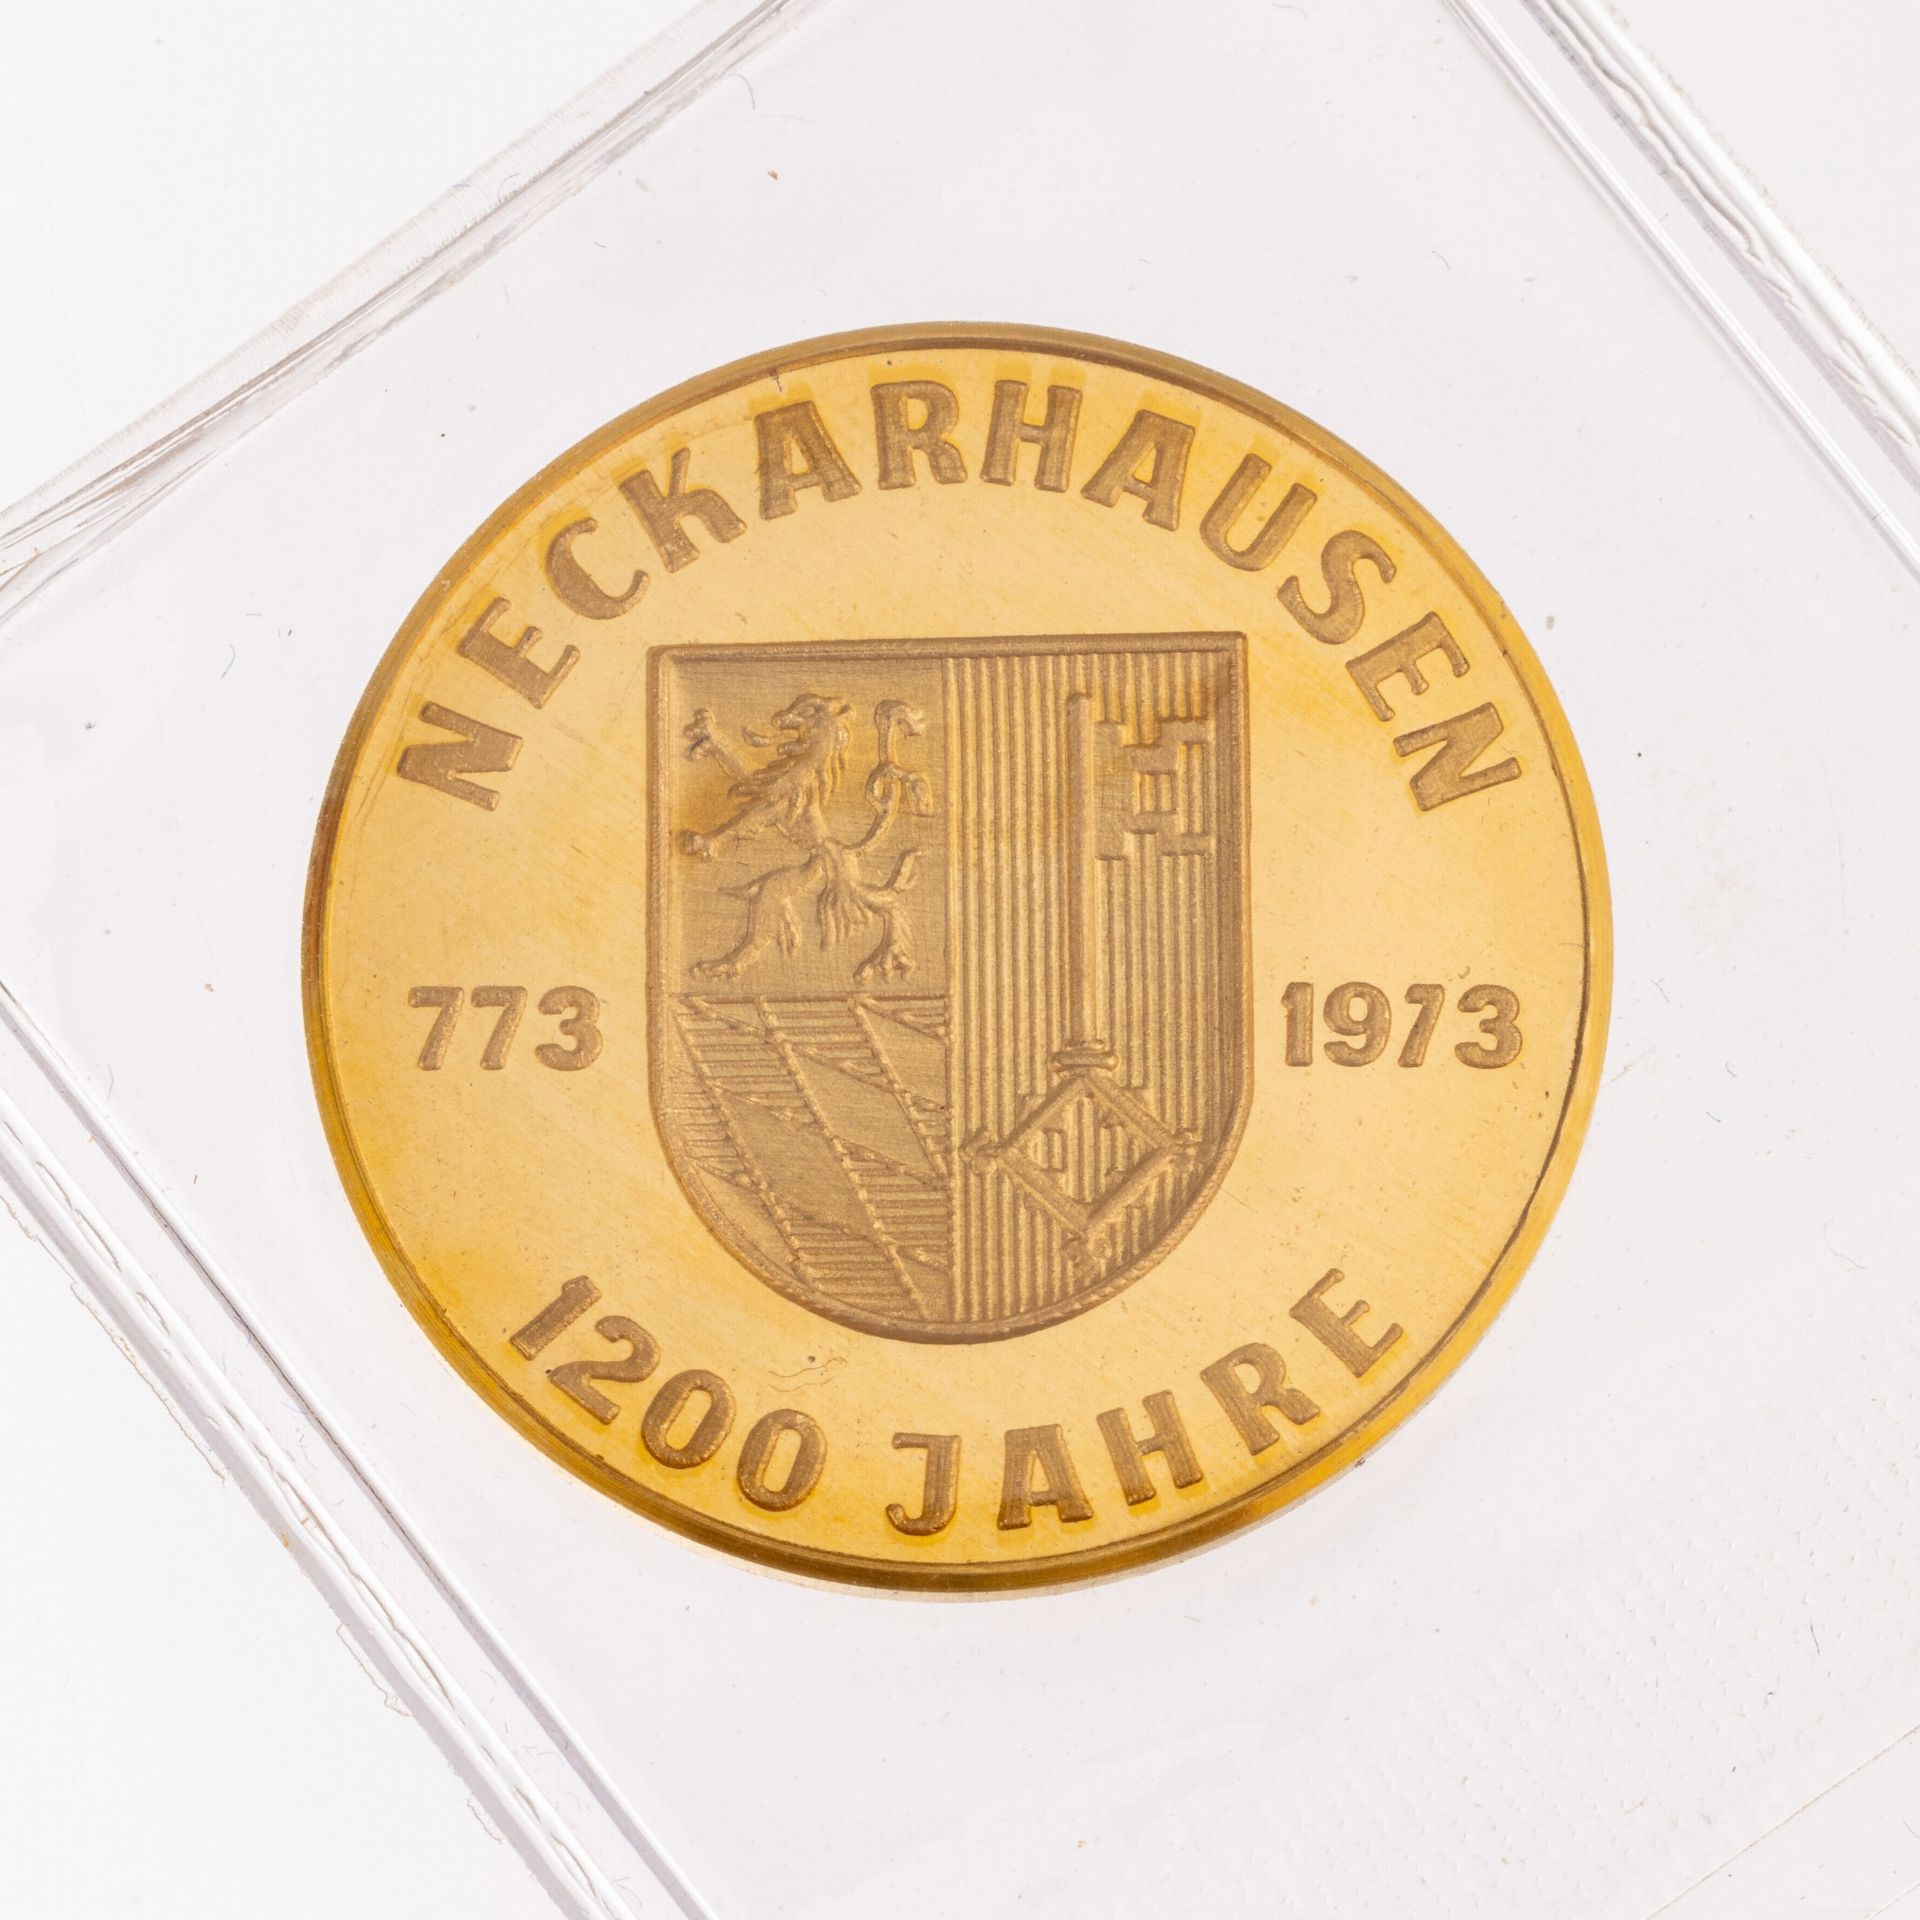 Goldmedaille 'Neckarhausen',   986er Gold, AV: 1200 Jahre